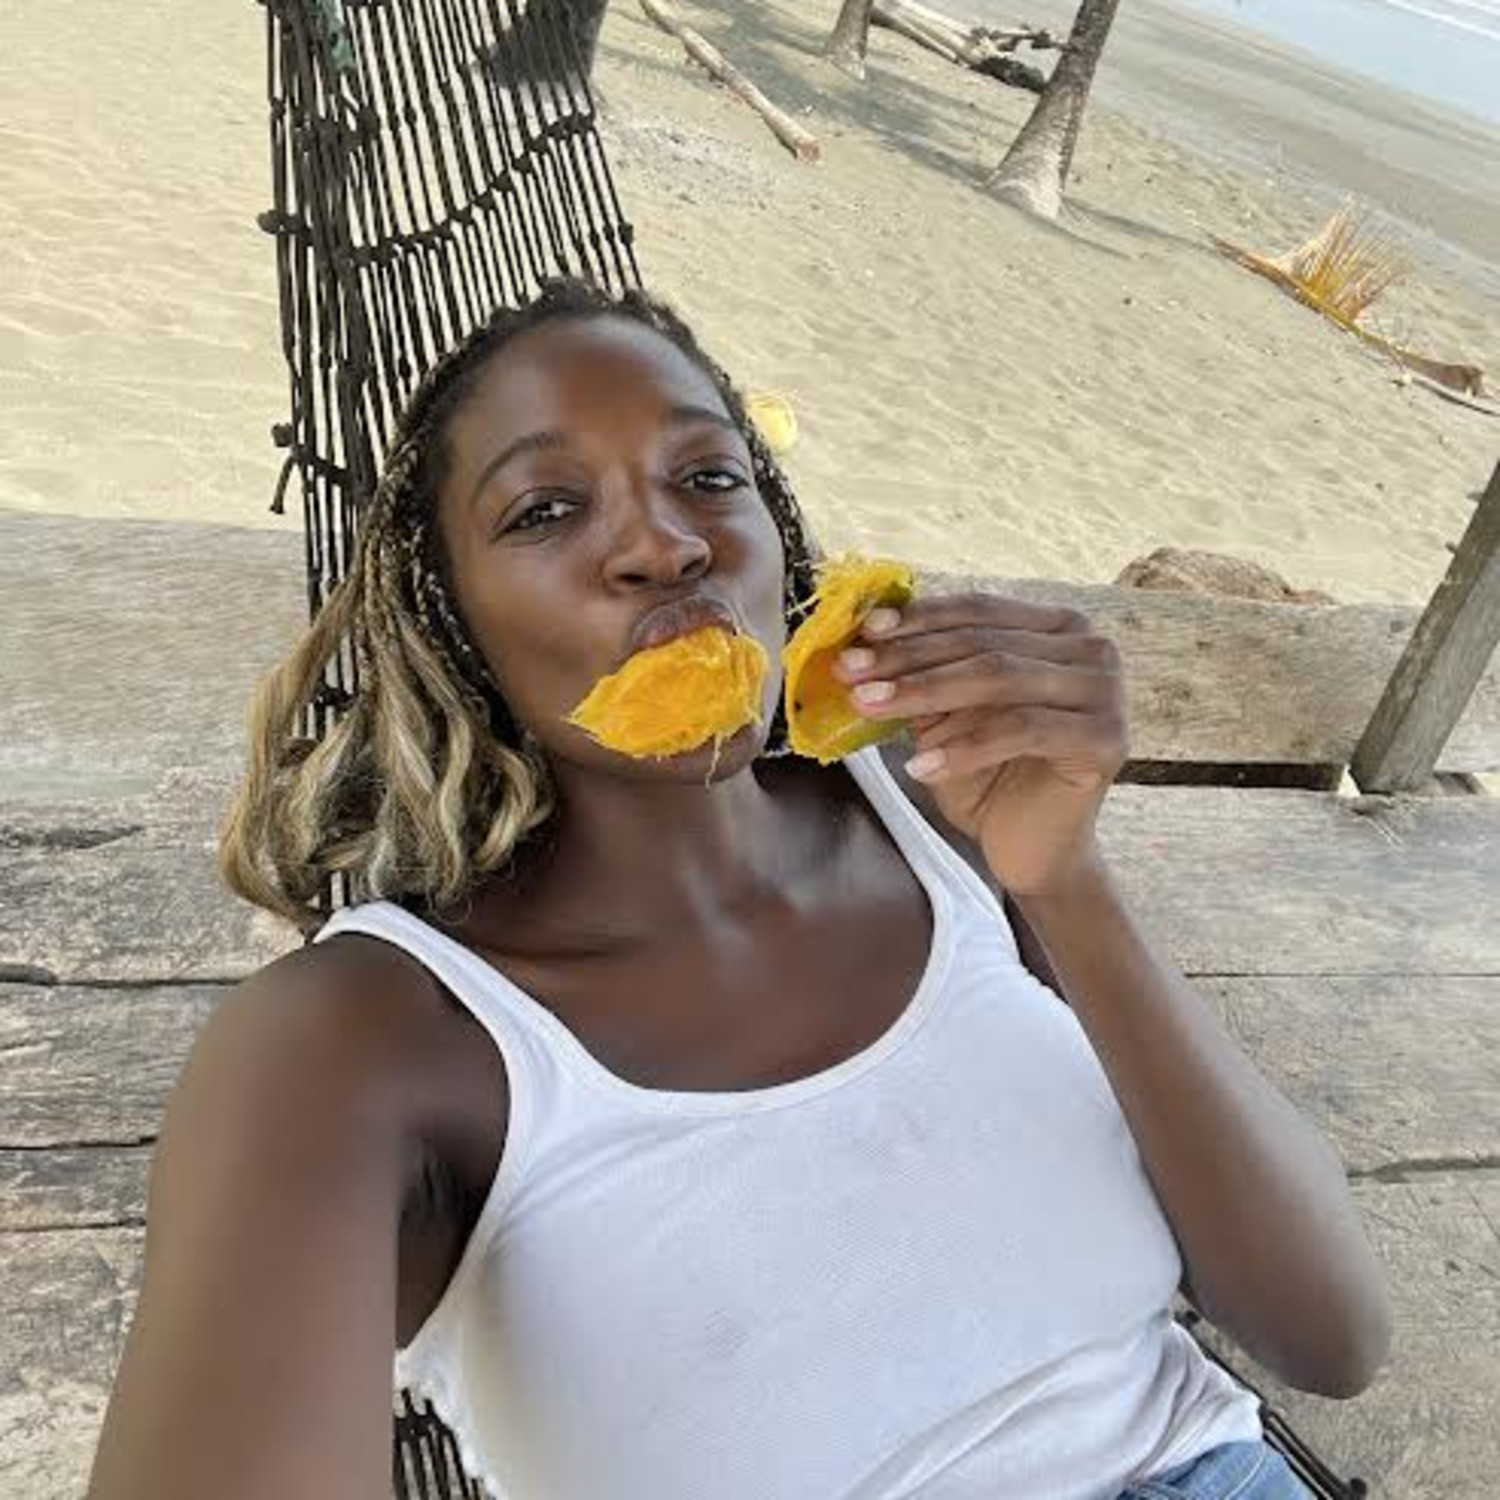 Travel advisor lying on a swing and eating mango